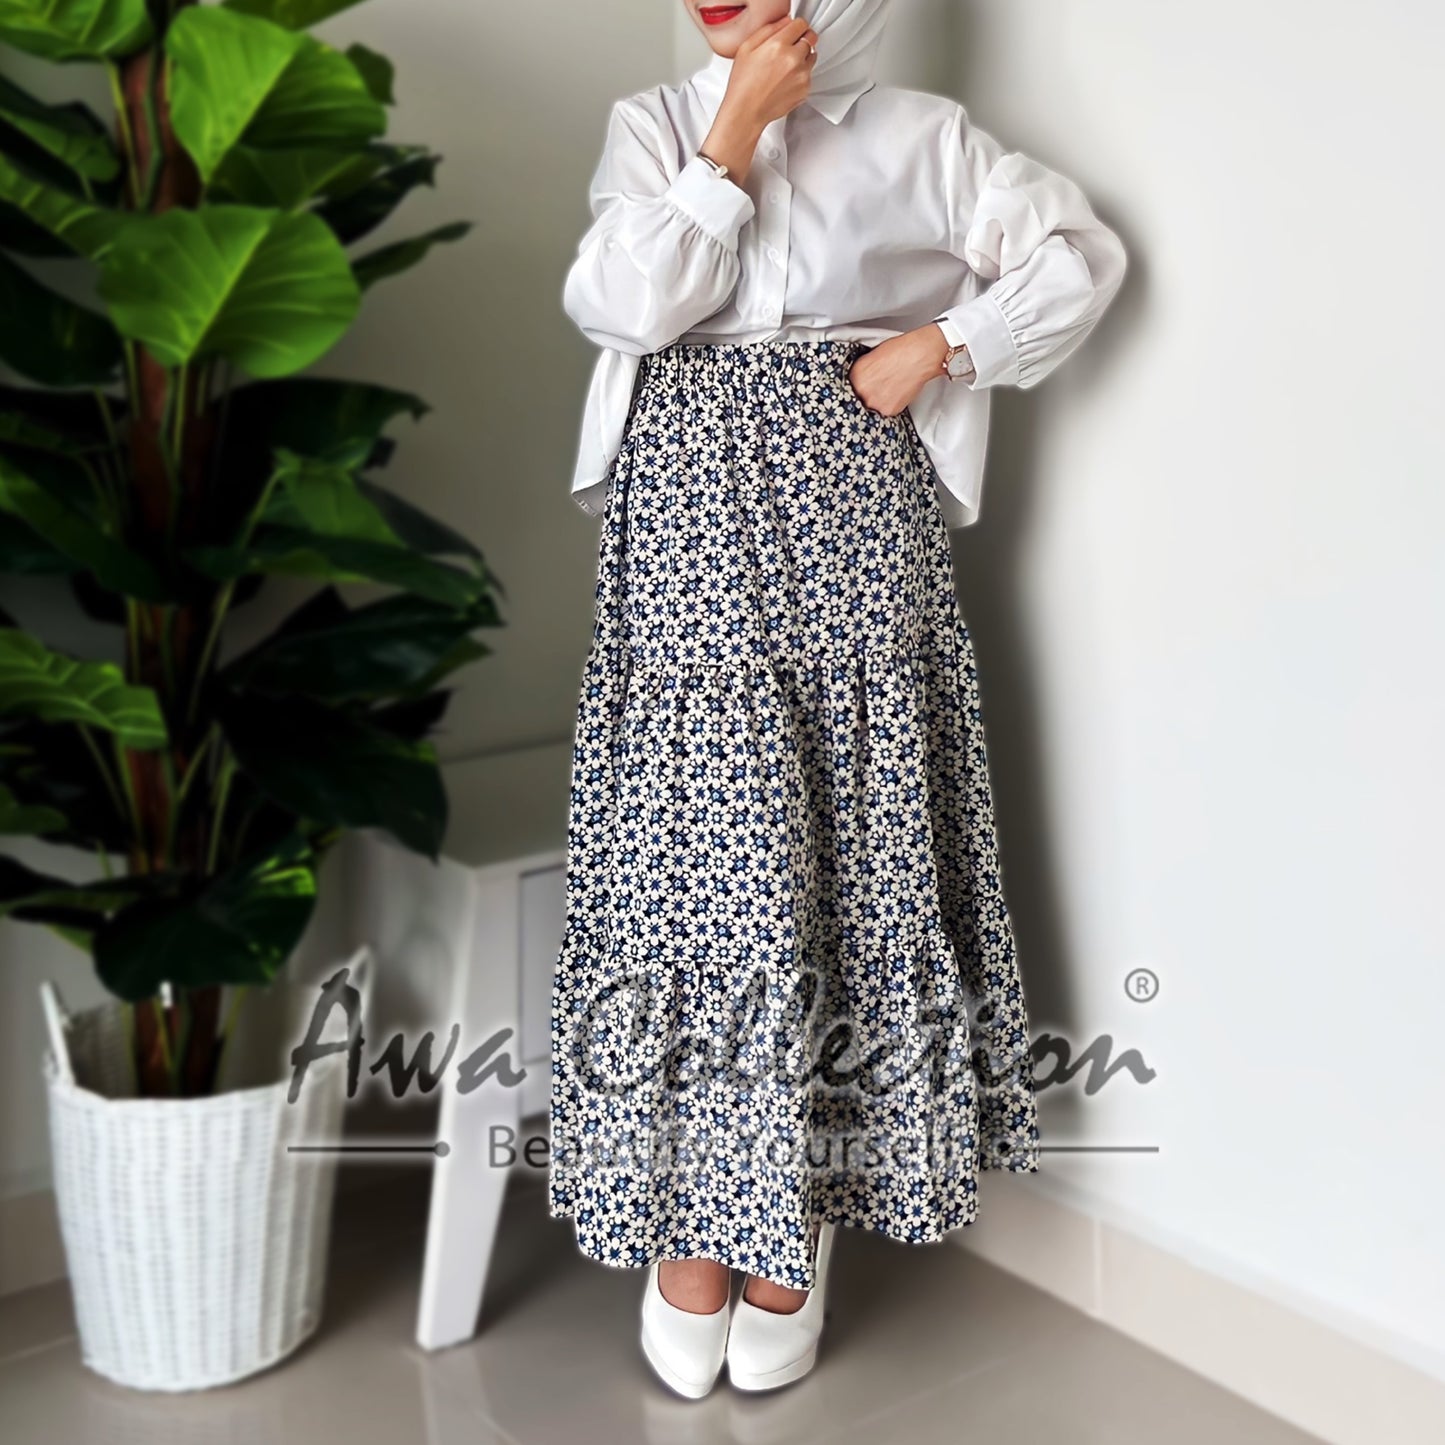 LALEESA Awa Collection BA506556 SKIRT QAIFA Casual Pleated Tiered Skirt Muslimah Skirt Labuh Skirt Pencil Skirt